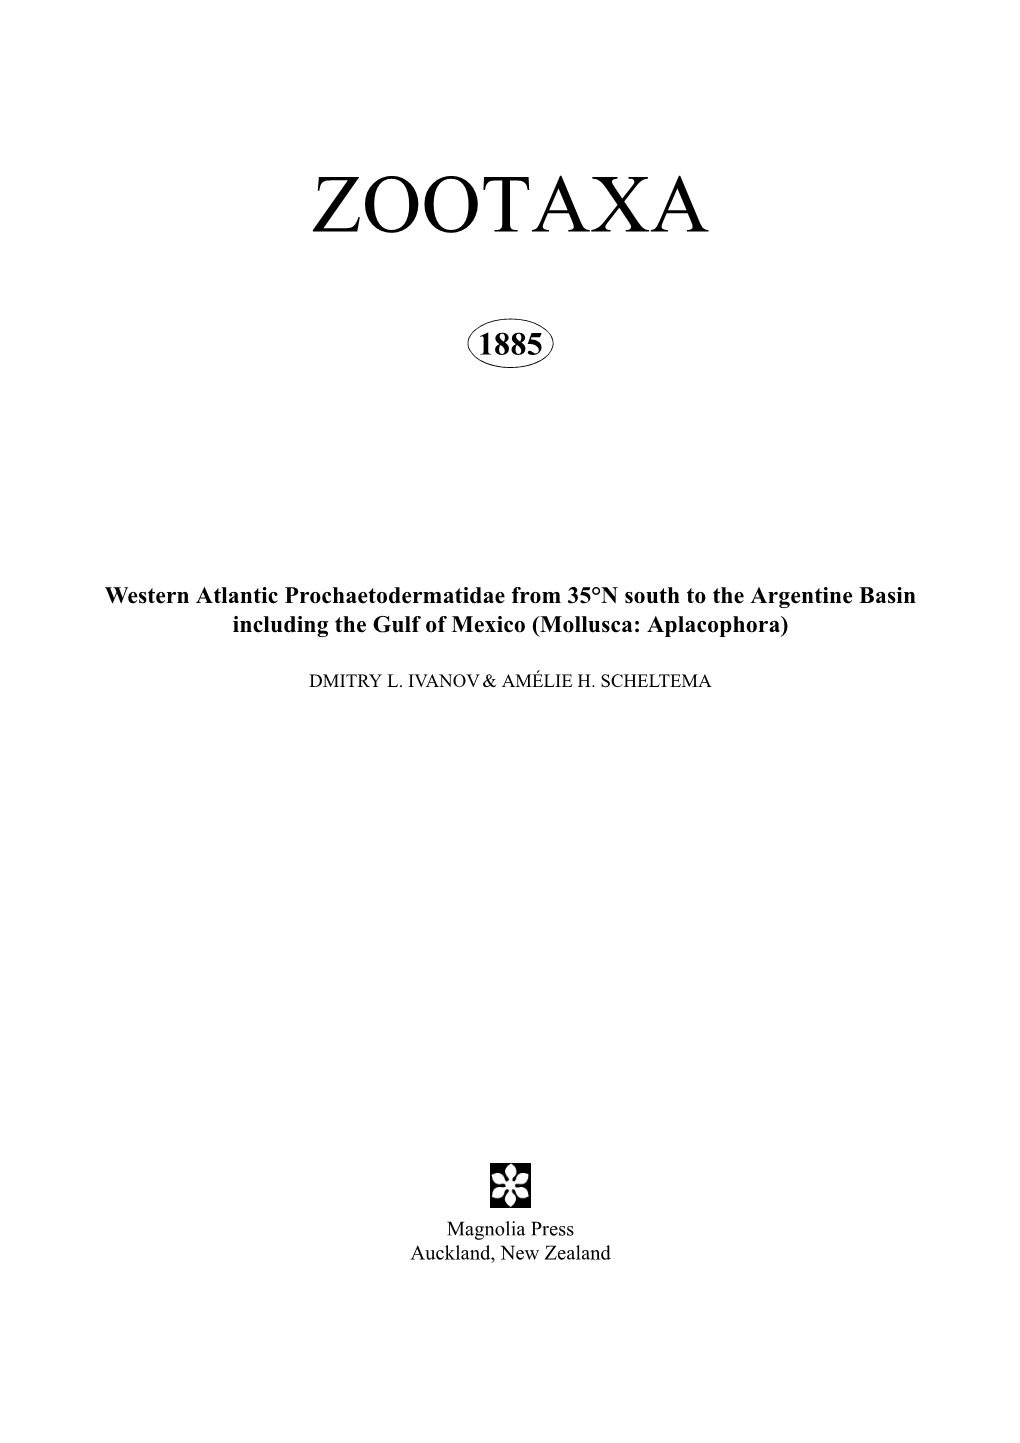 Zootaxa, Western Atlantic Prochaetodermatidae from 35